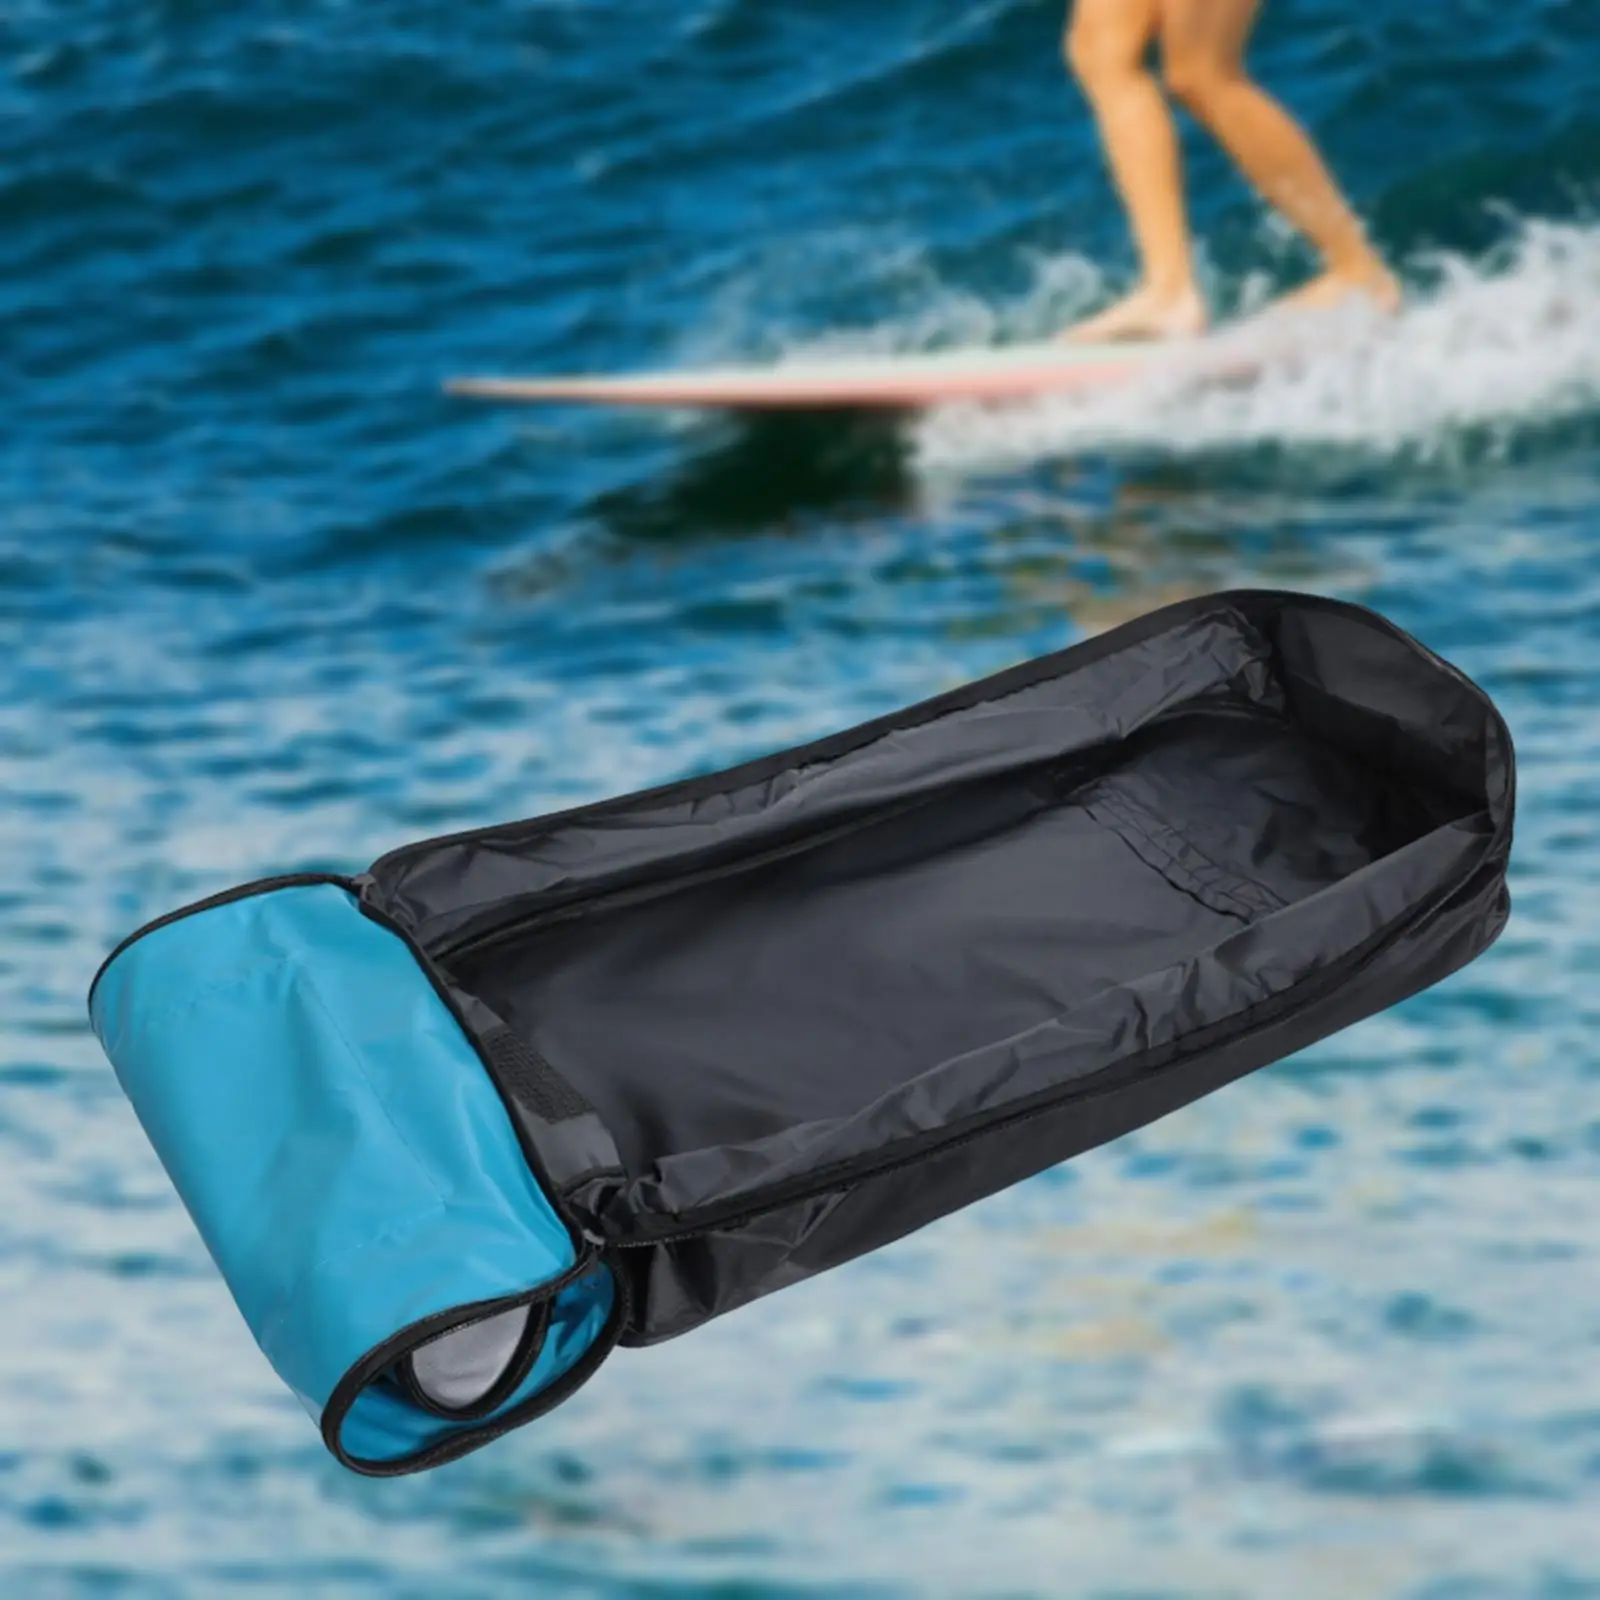 Inflatable Paddle Board Backpack Carrier Adjustable Straps Stand up Paddle Board Bag for Surfboard Longboard Shortboard Surfing